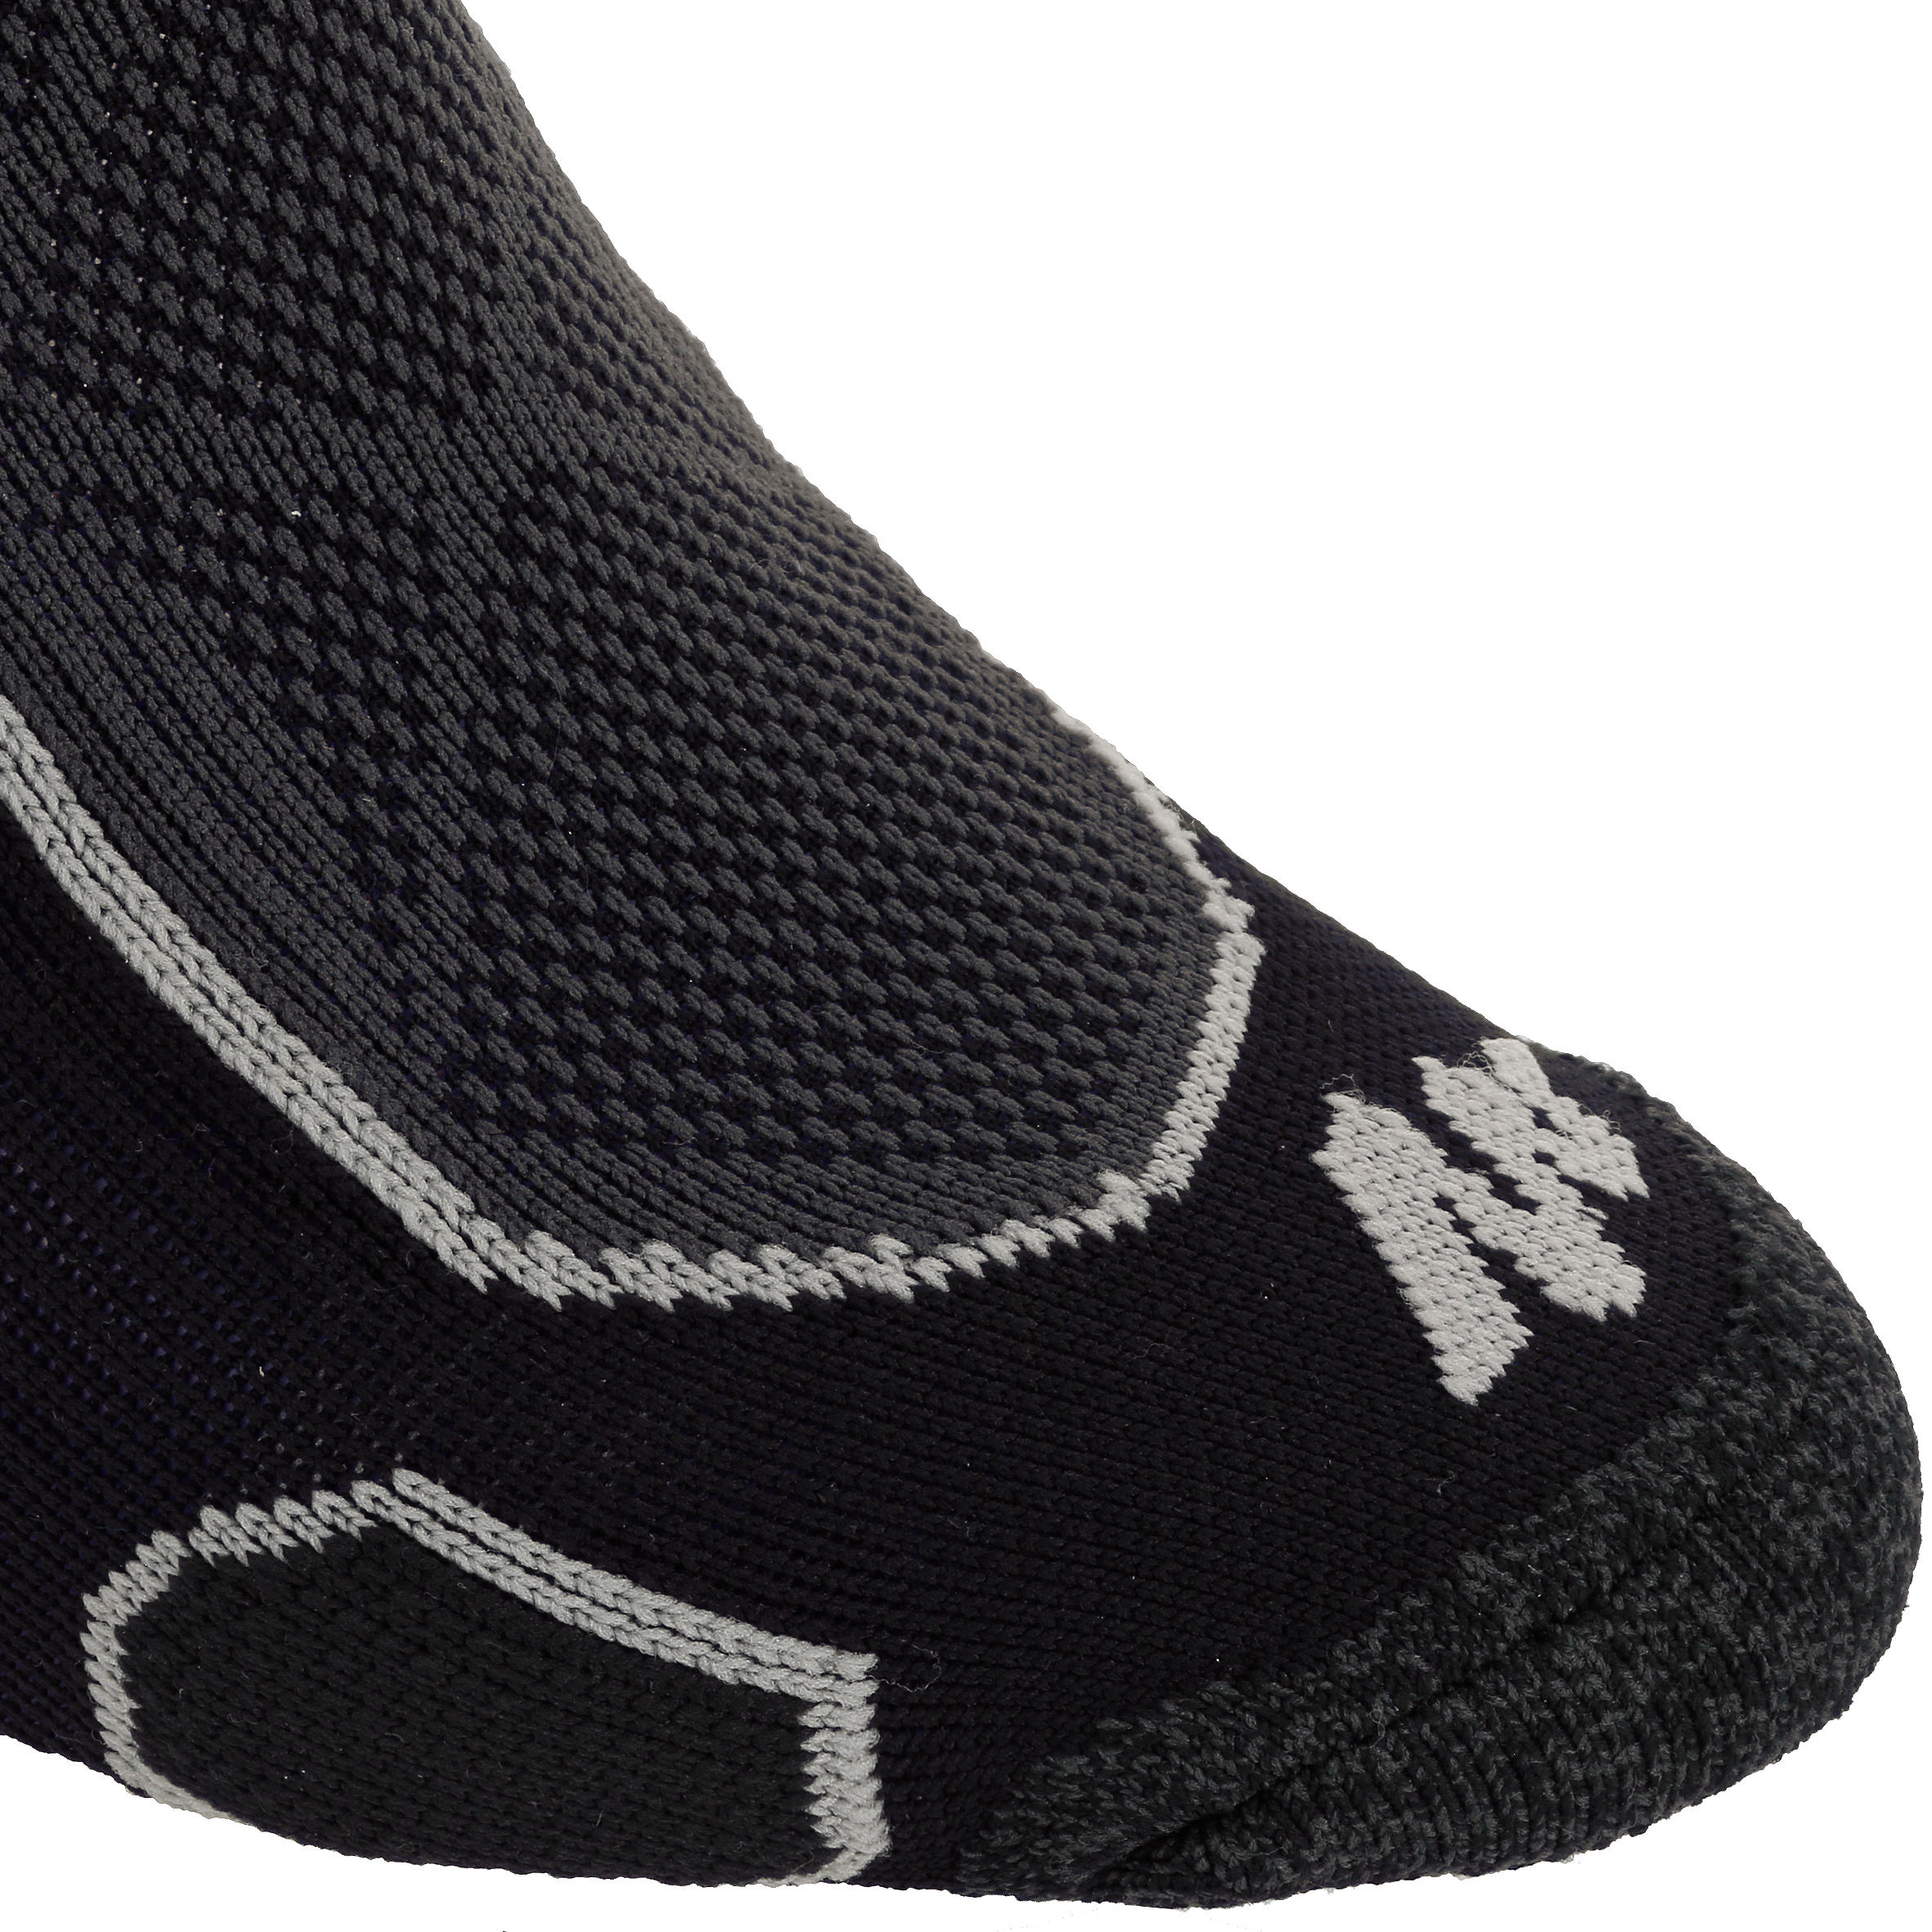 Mid-Length Walking Socks 2 Pairs - Black 4/7